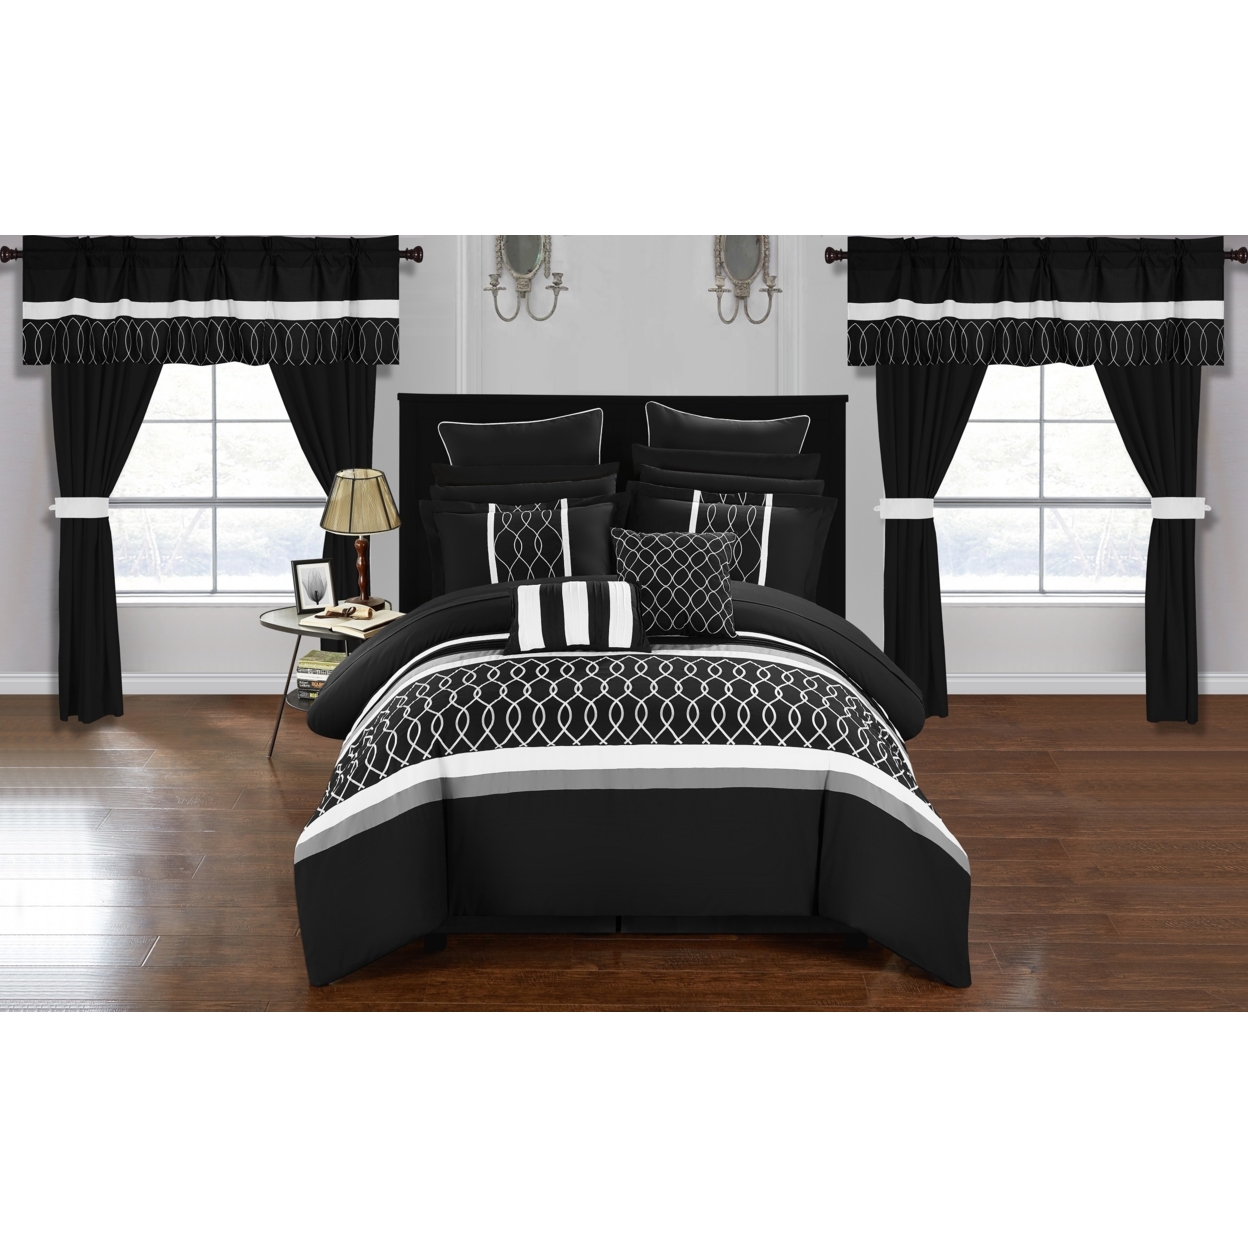 Topaz 24 Piece Comforter Bed In A Bag Pleated Ruffled Designer Embellished Bedding Set - Gray, King